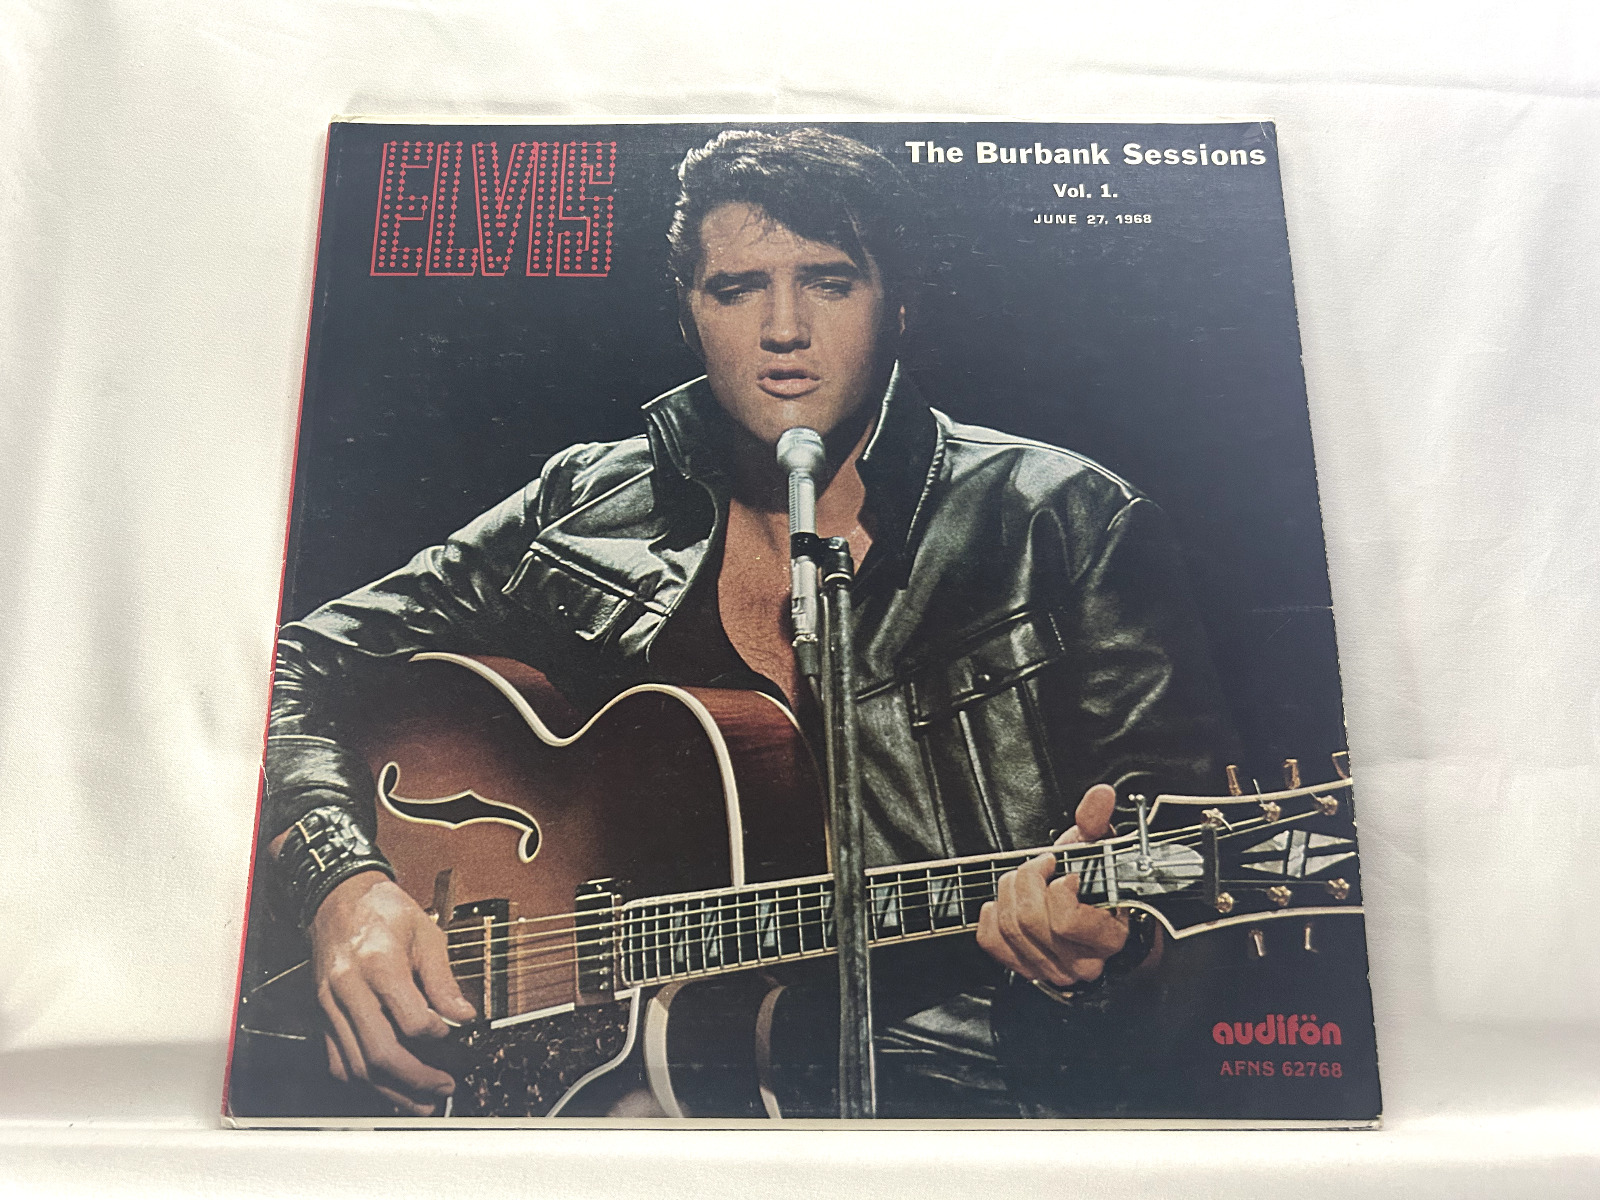 Elvis Presley The Burbank Sessions Vol. 1  AFNS 62768 Audition Records Double LP